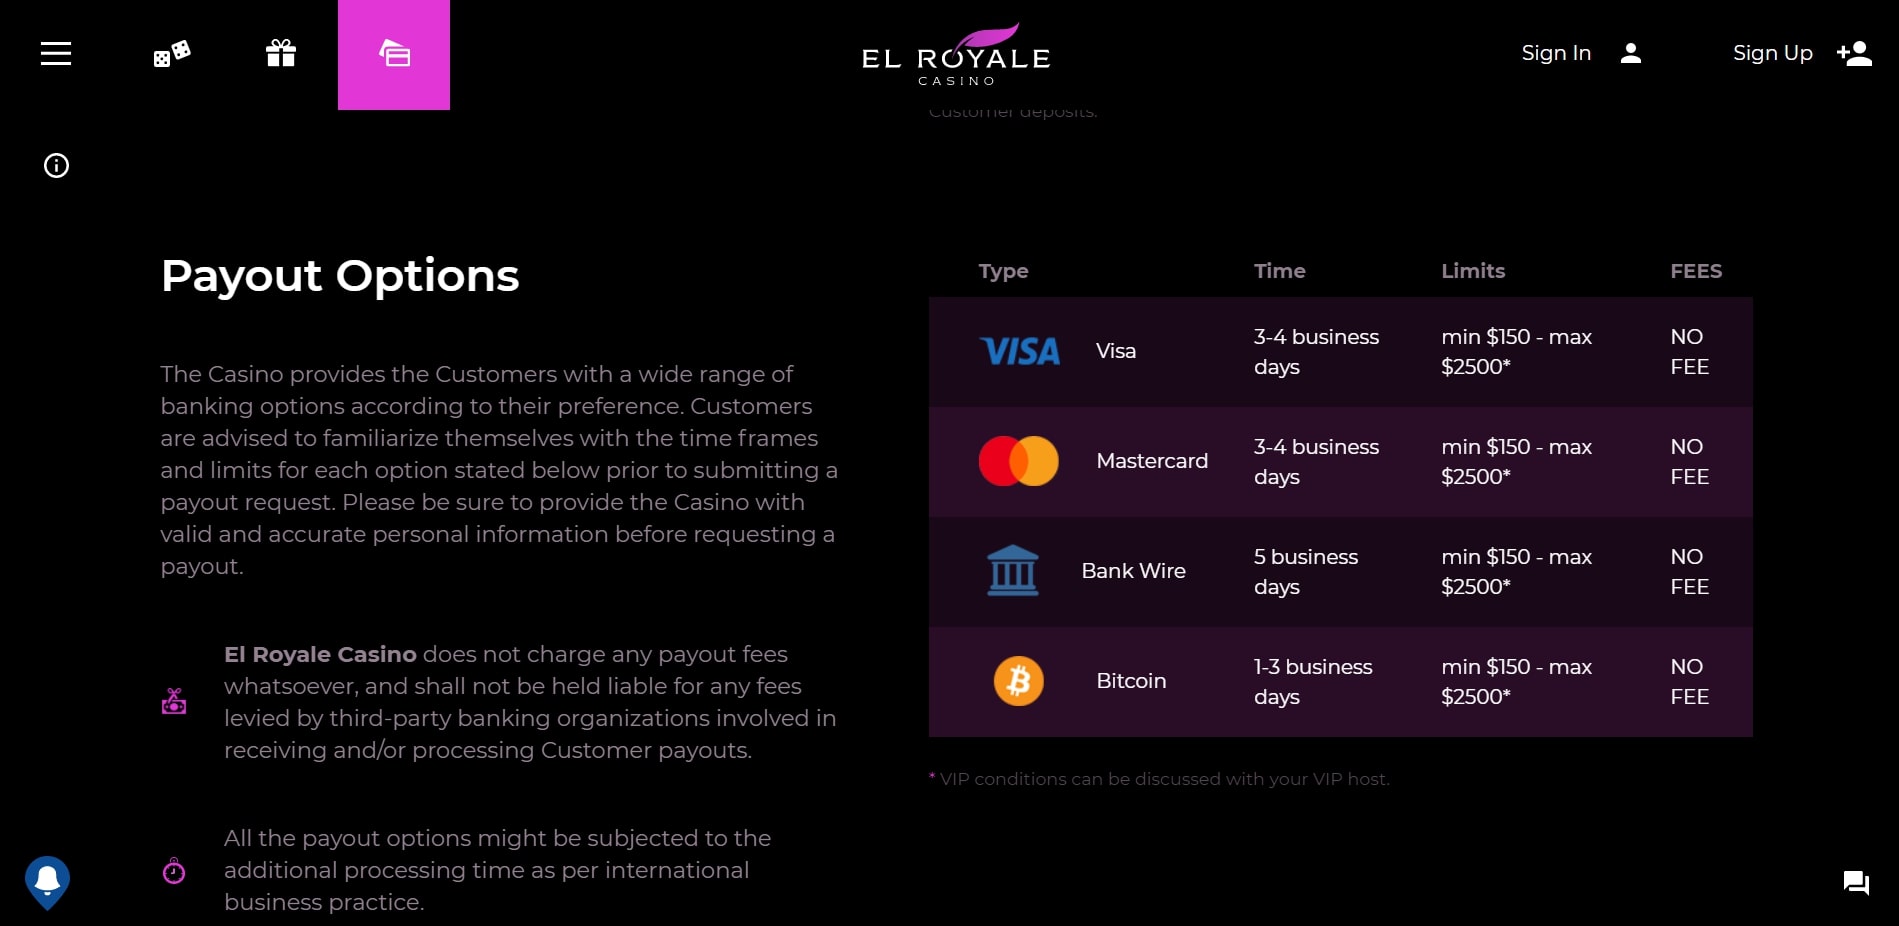 El Royale Casino Payment Methods